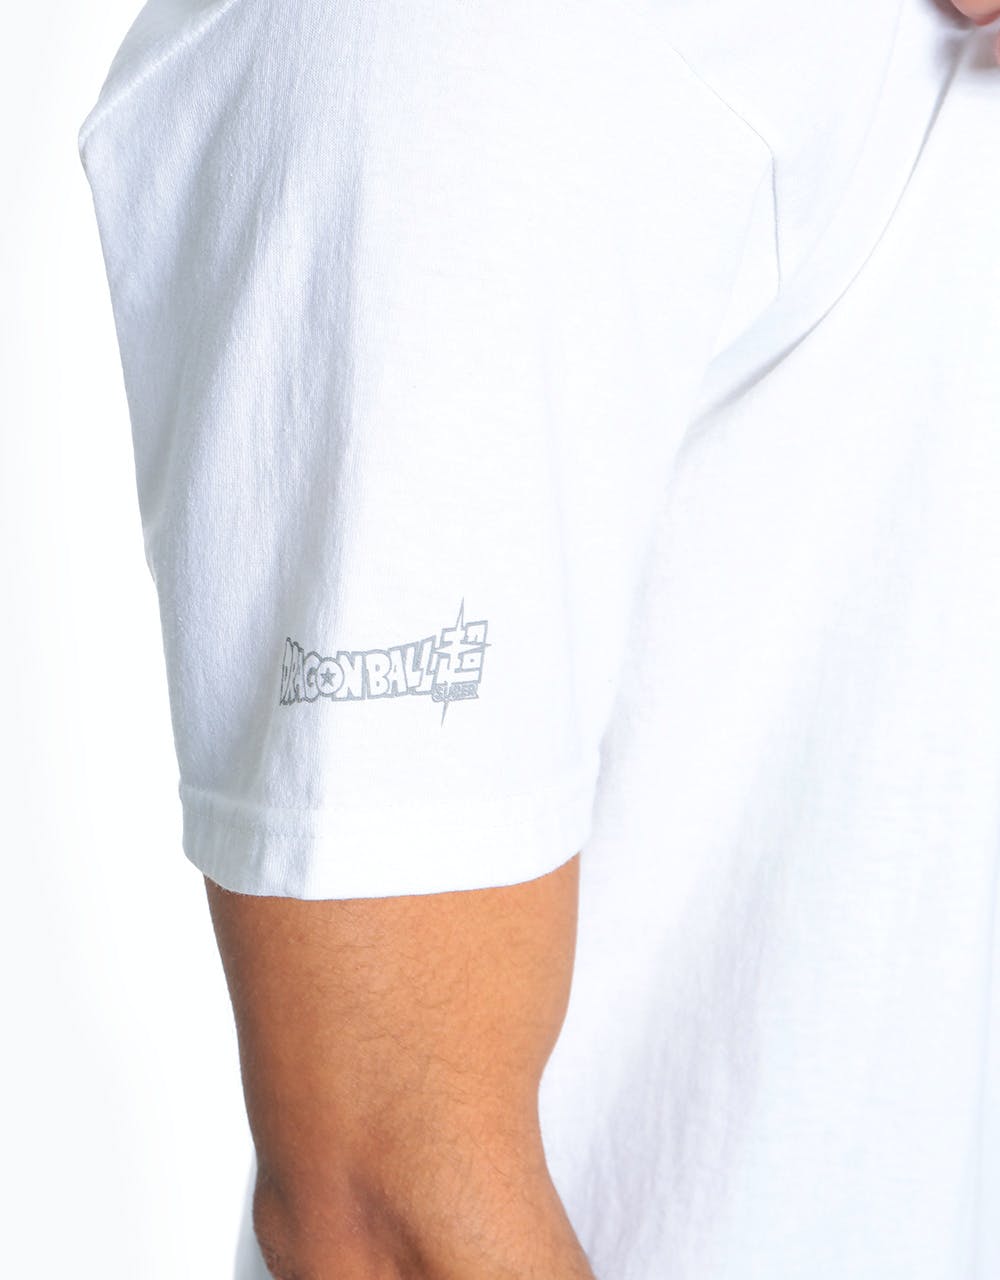 Primitive x Dragon Ball Super Fat Buu T-Shirt - White